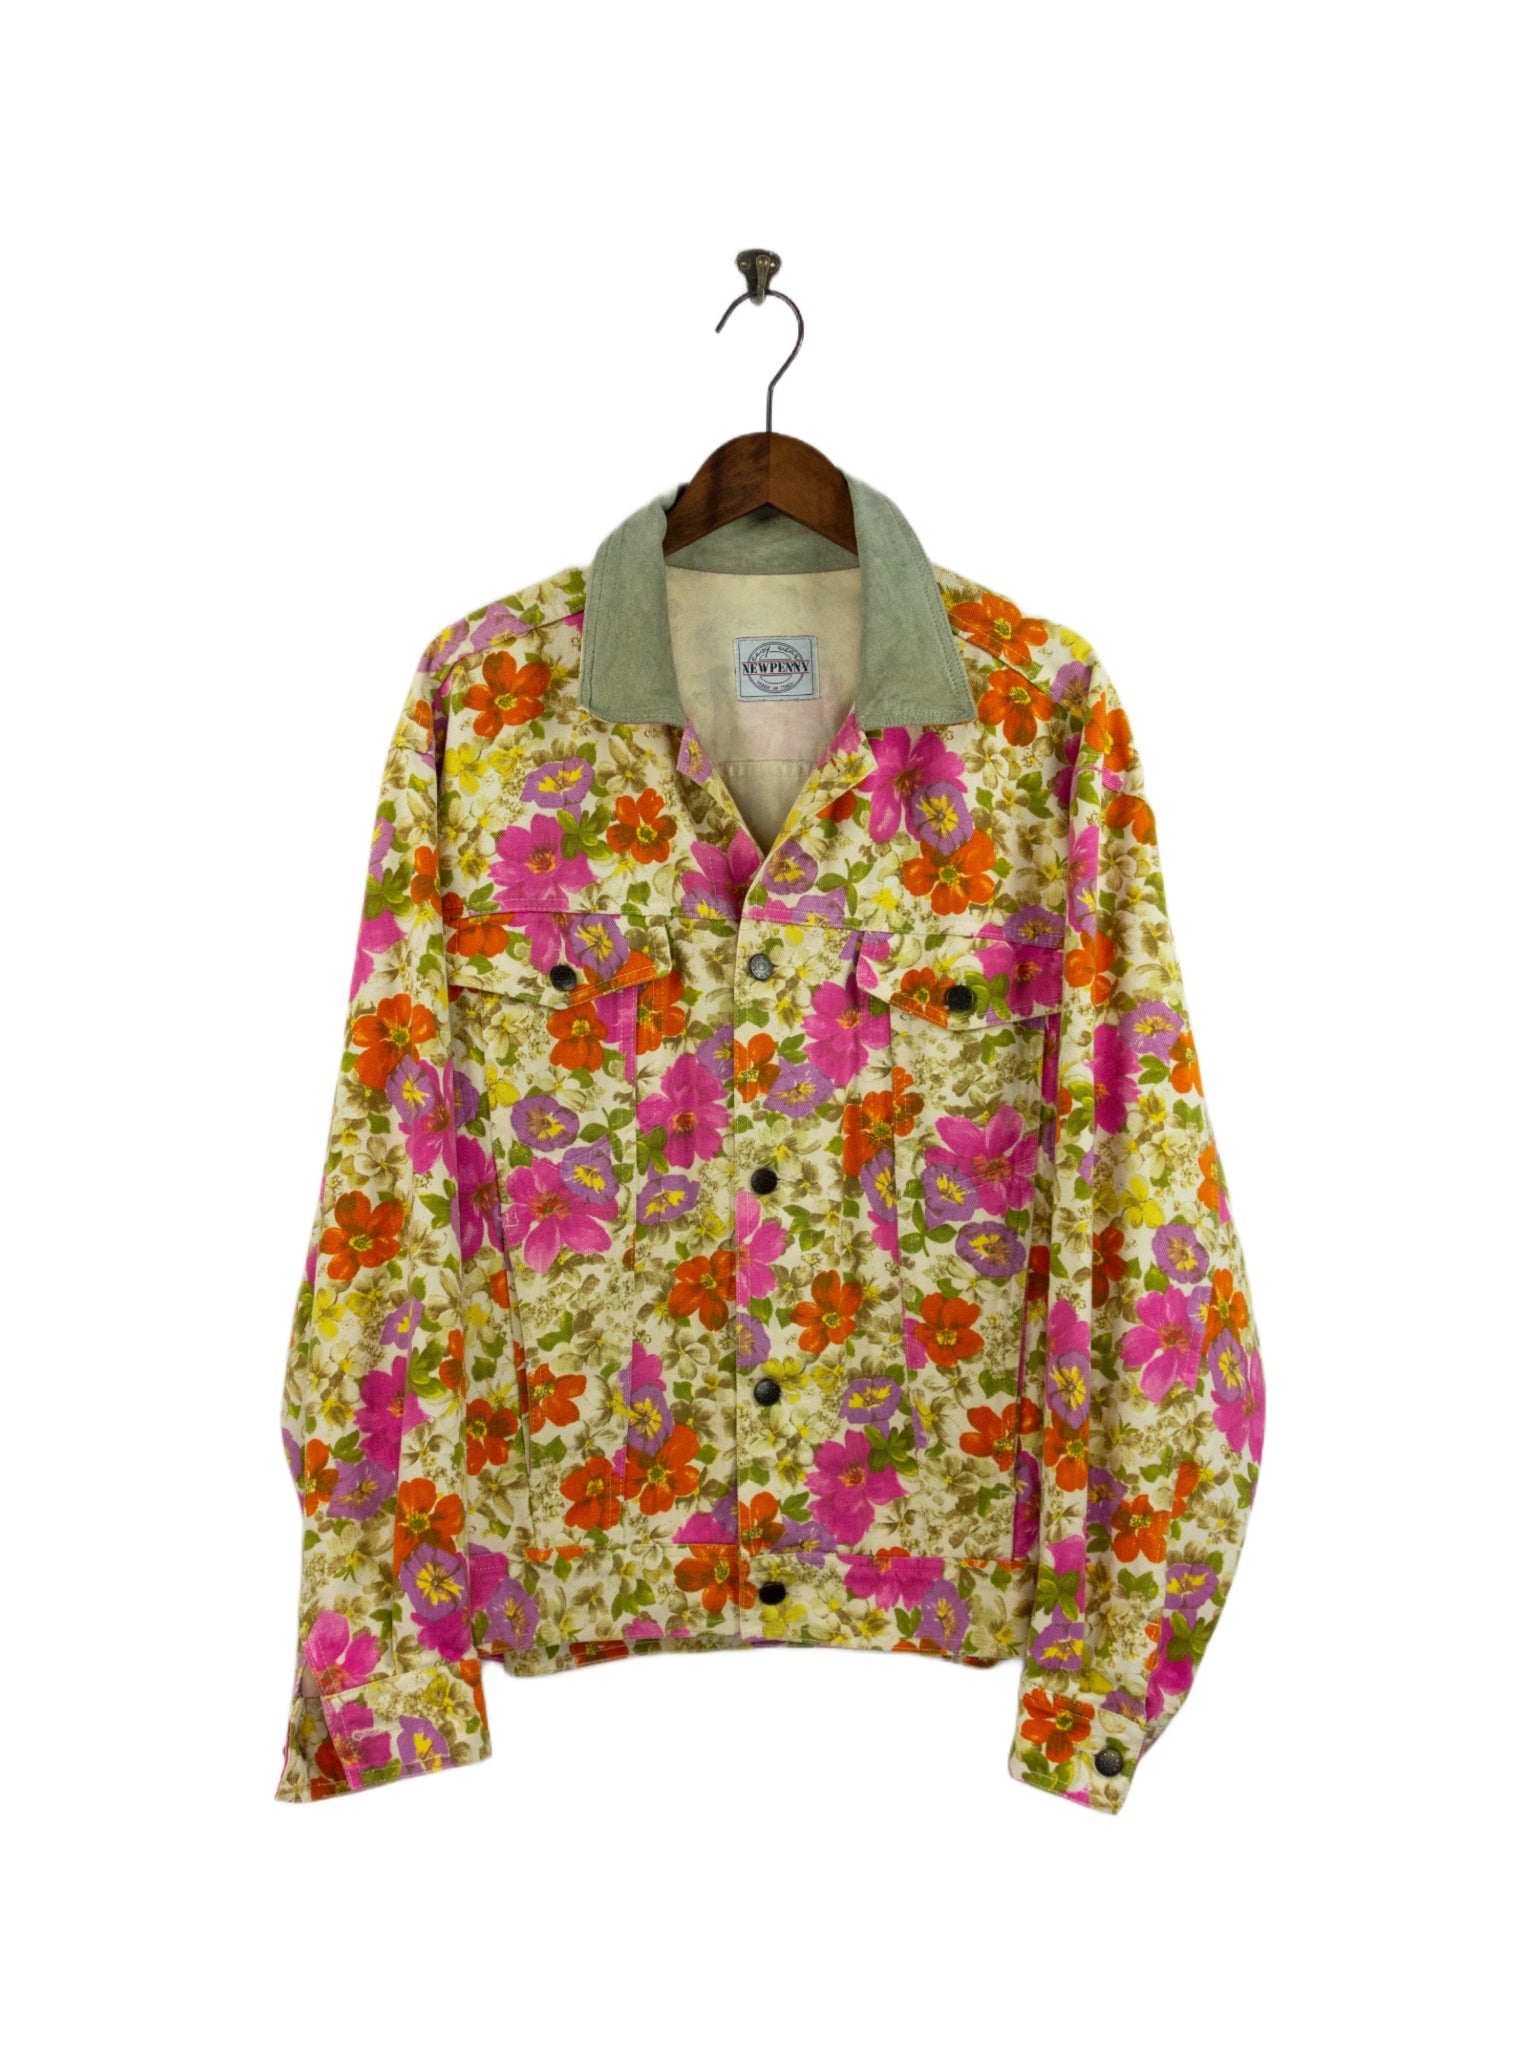 Jeansjacke mit floralem Muster L/XL